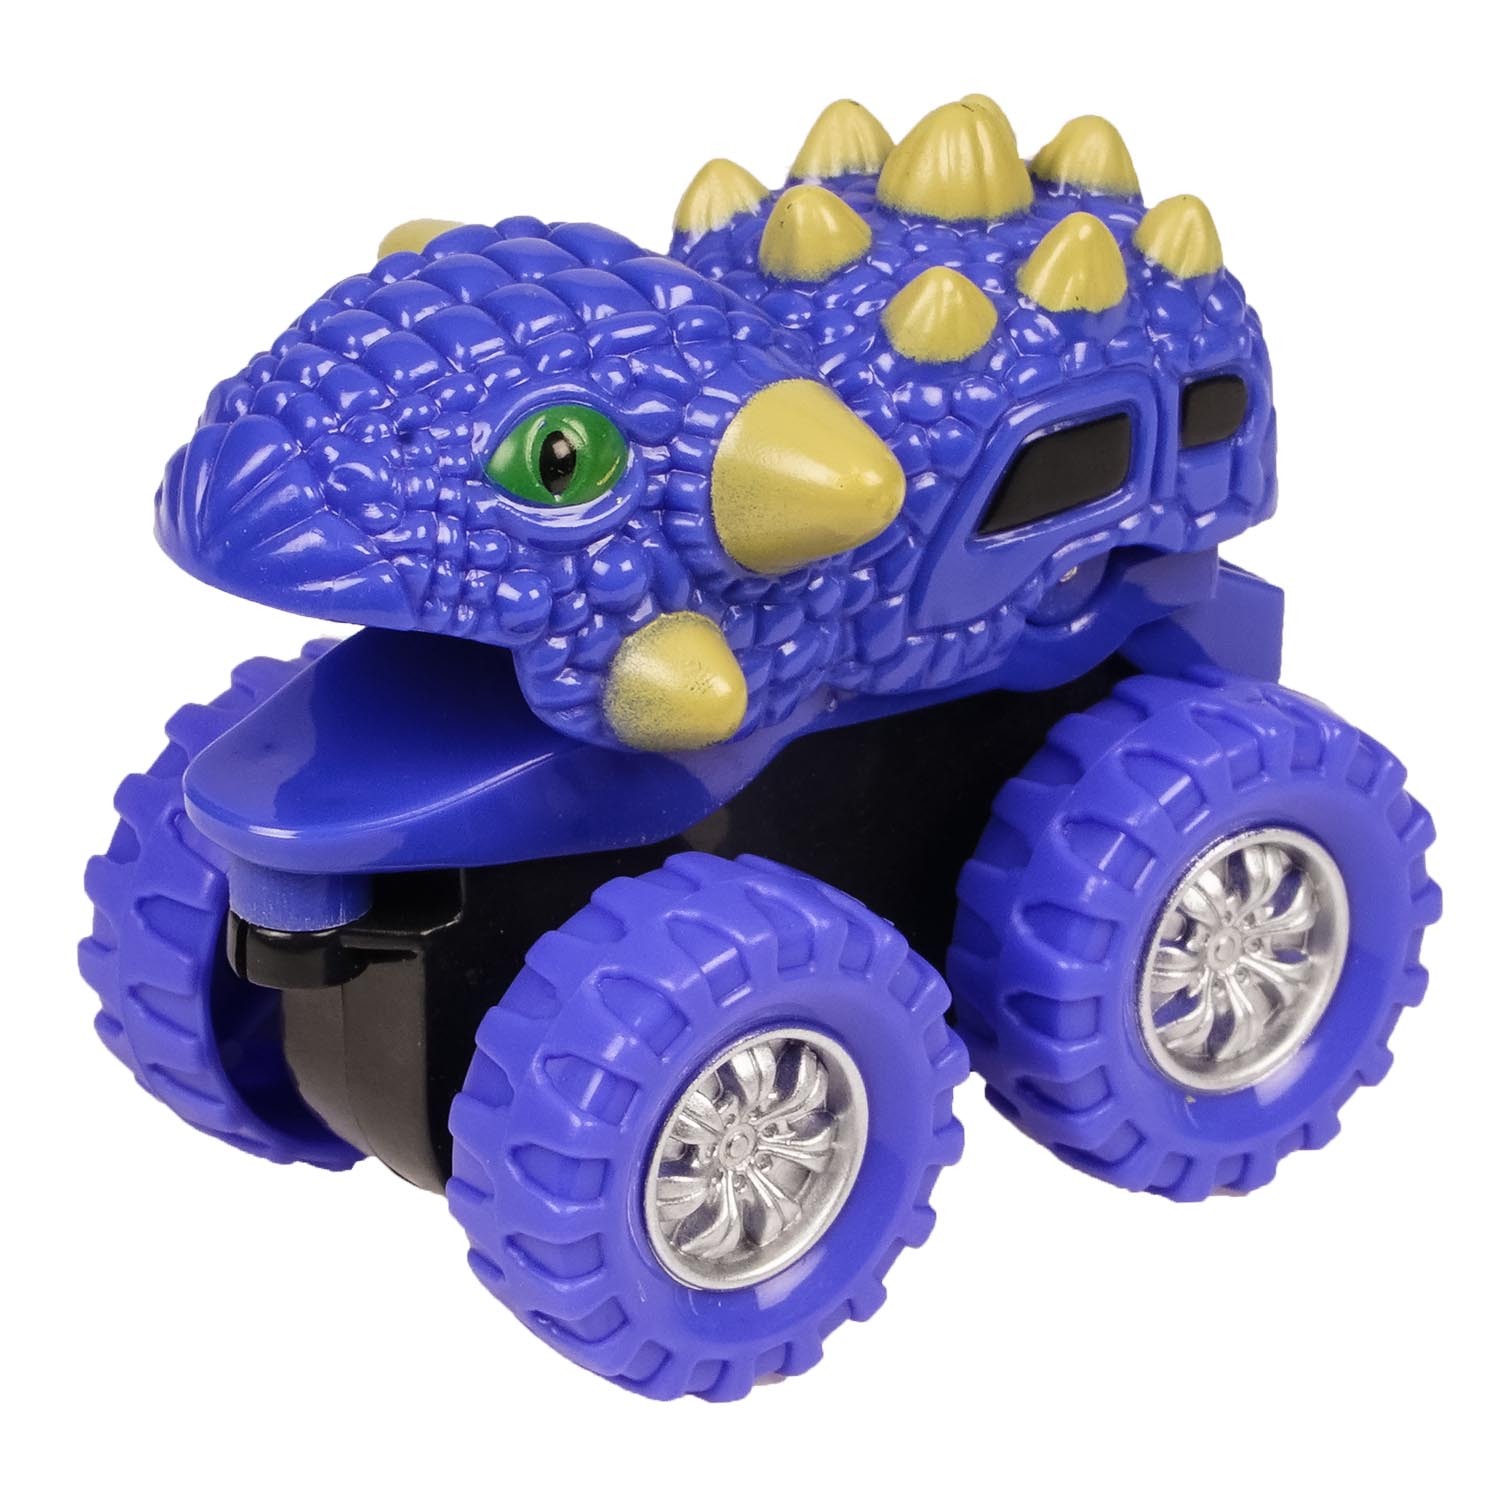 Tracksterz Multi Coloured Monster Trucks Toy 5 Pack Image 2